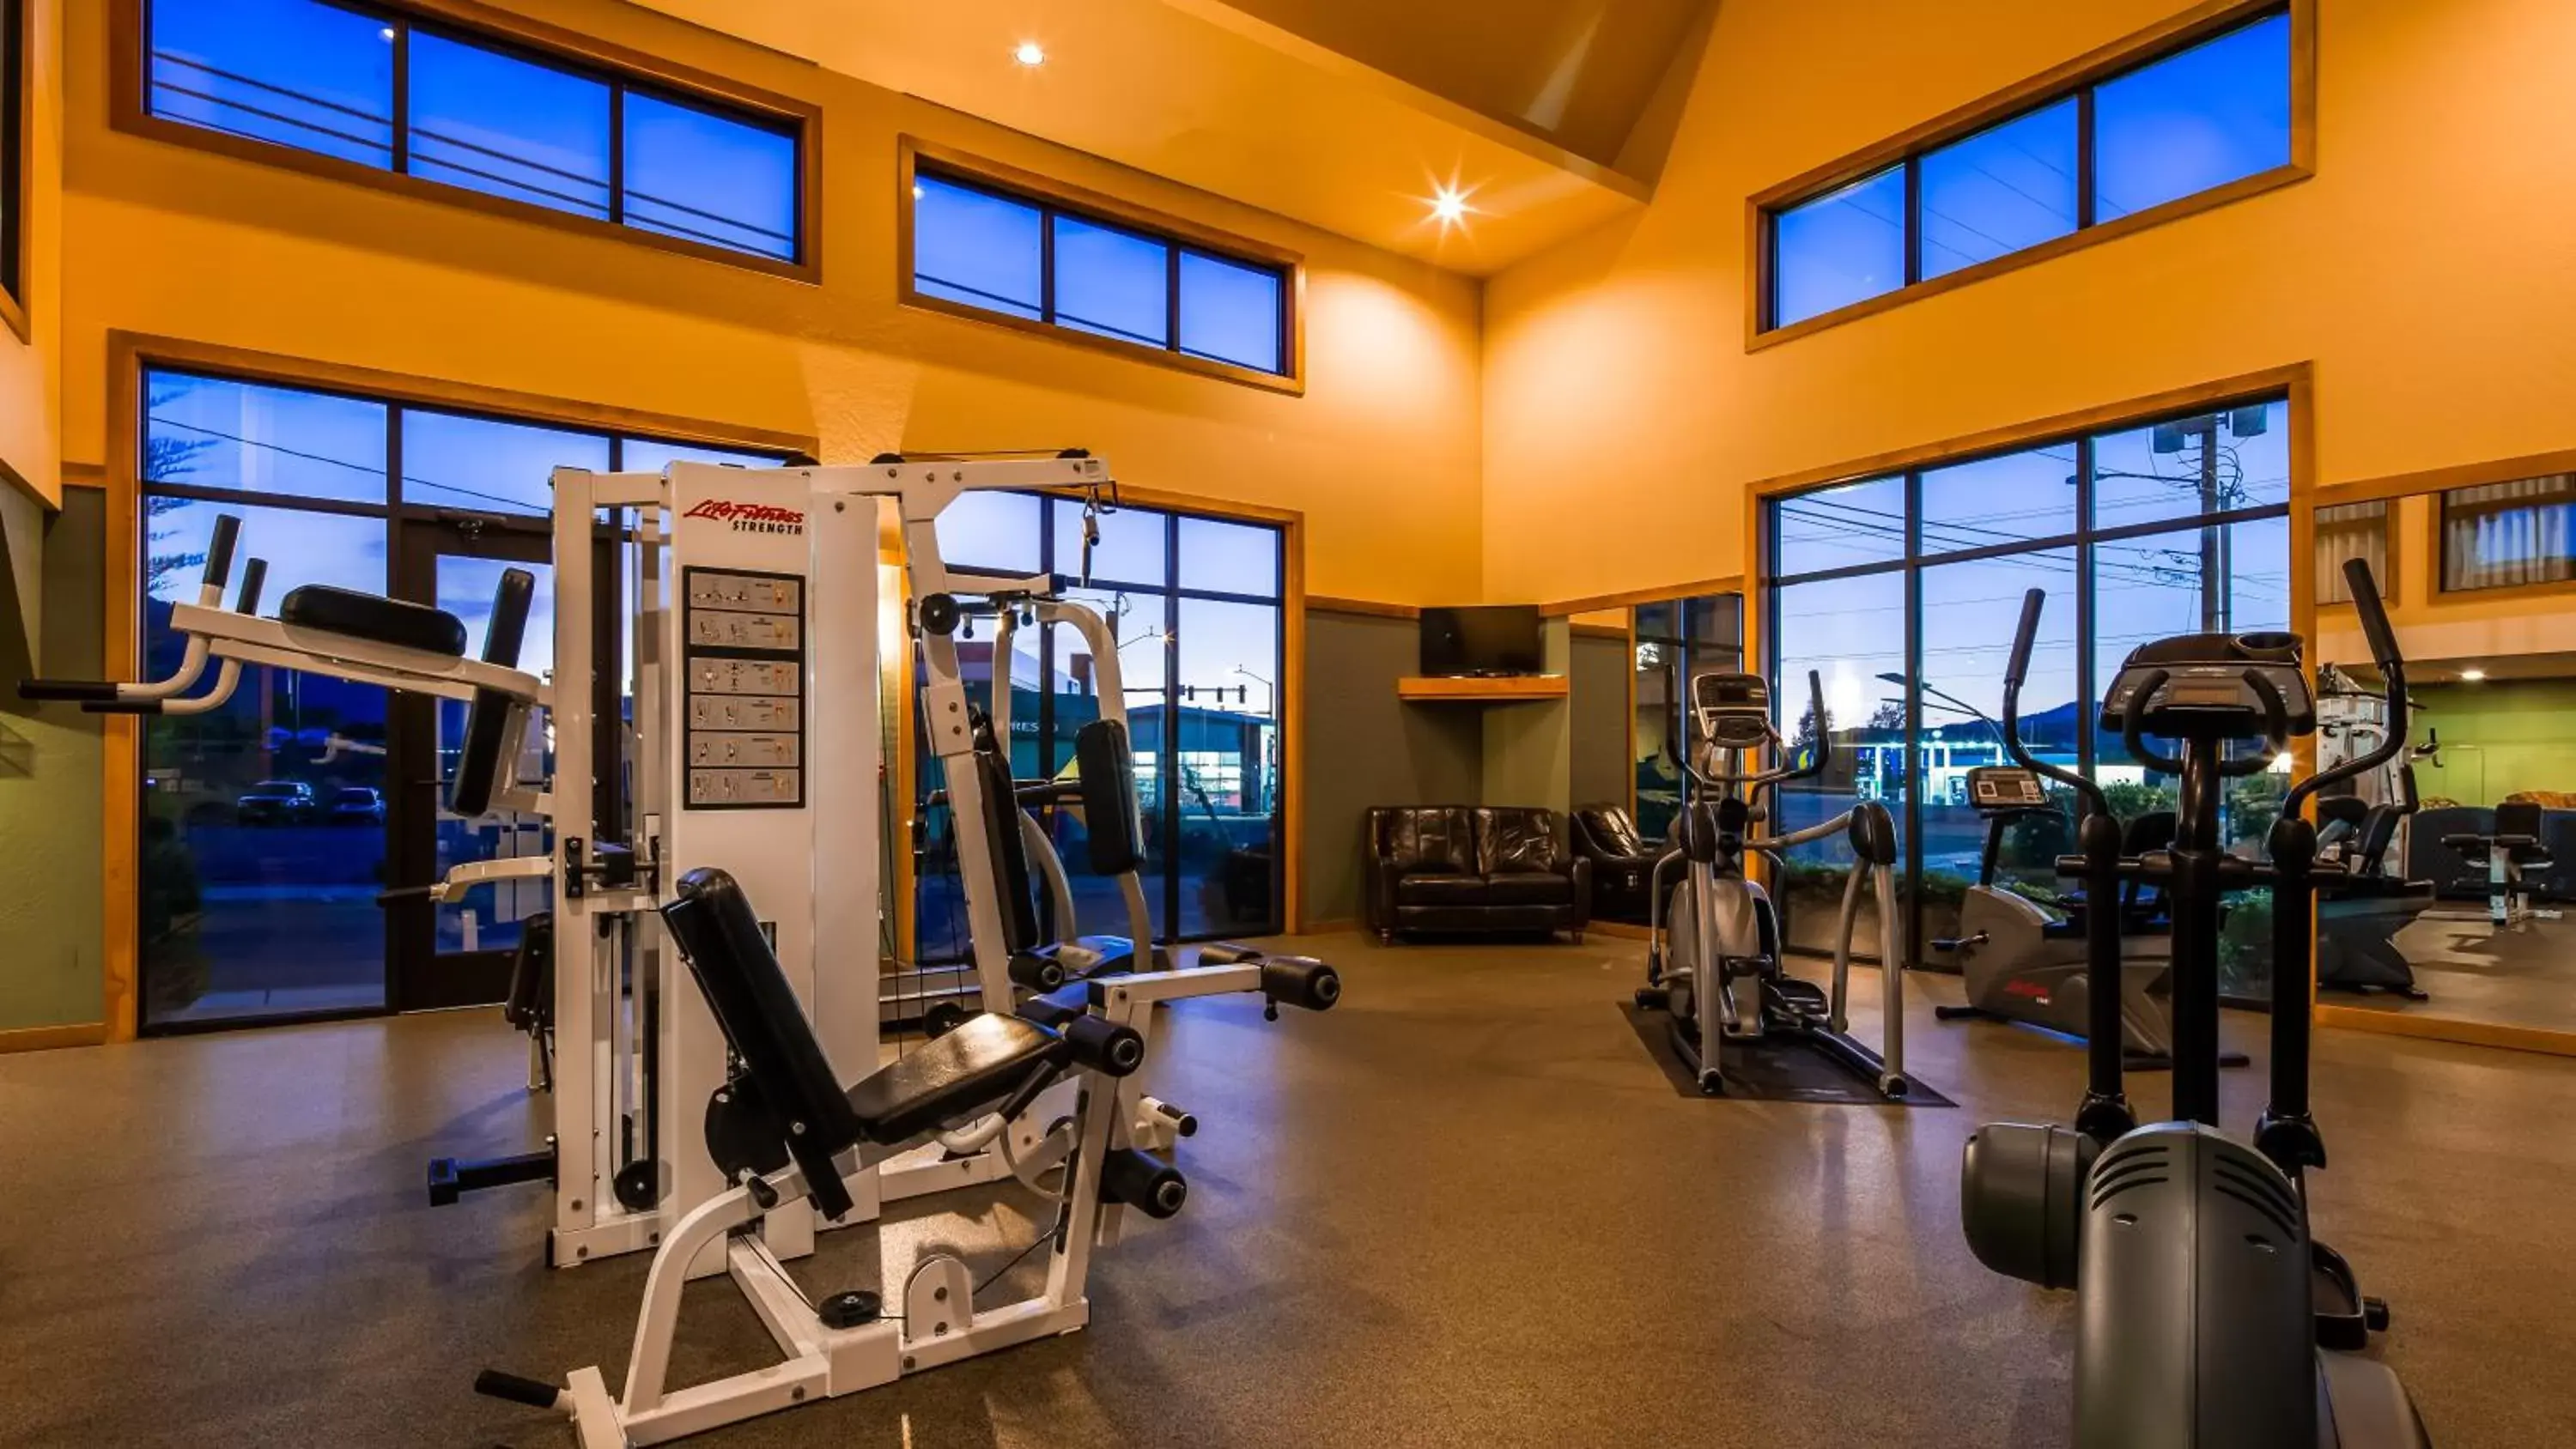 Fitness centre/facilities, Fitness Center/Facilities in Best Western Windsor Inn